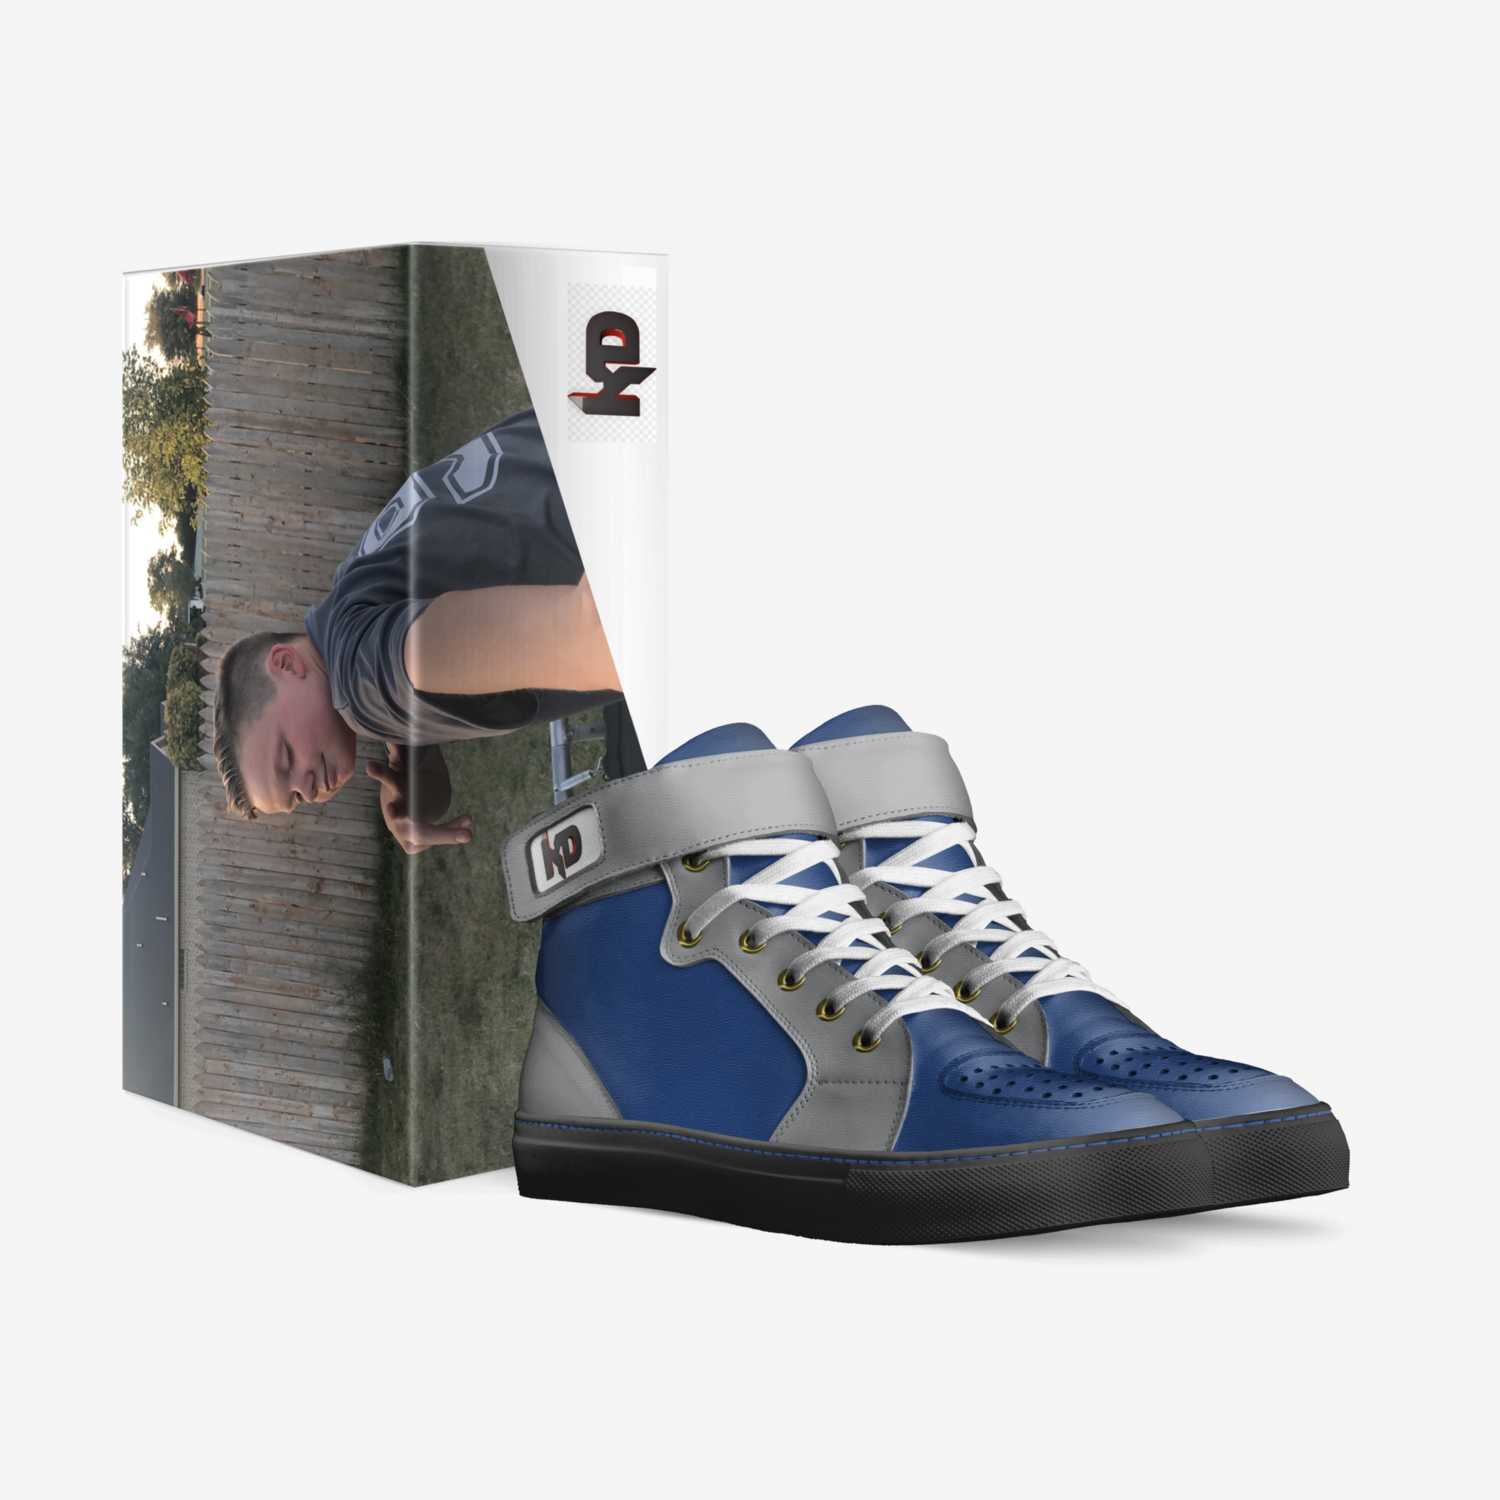 Draino 1's custom made in Italy shoes by Riley Bullard | Box view